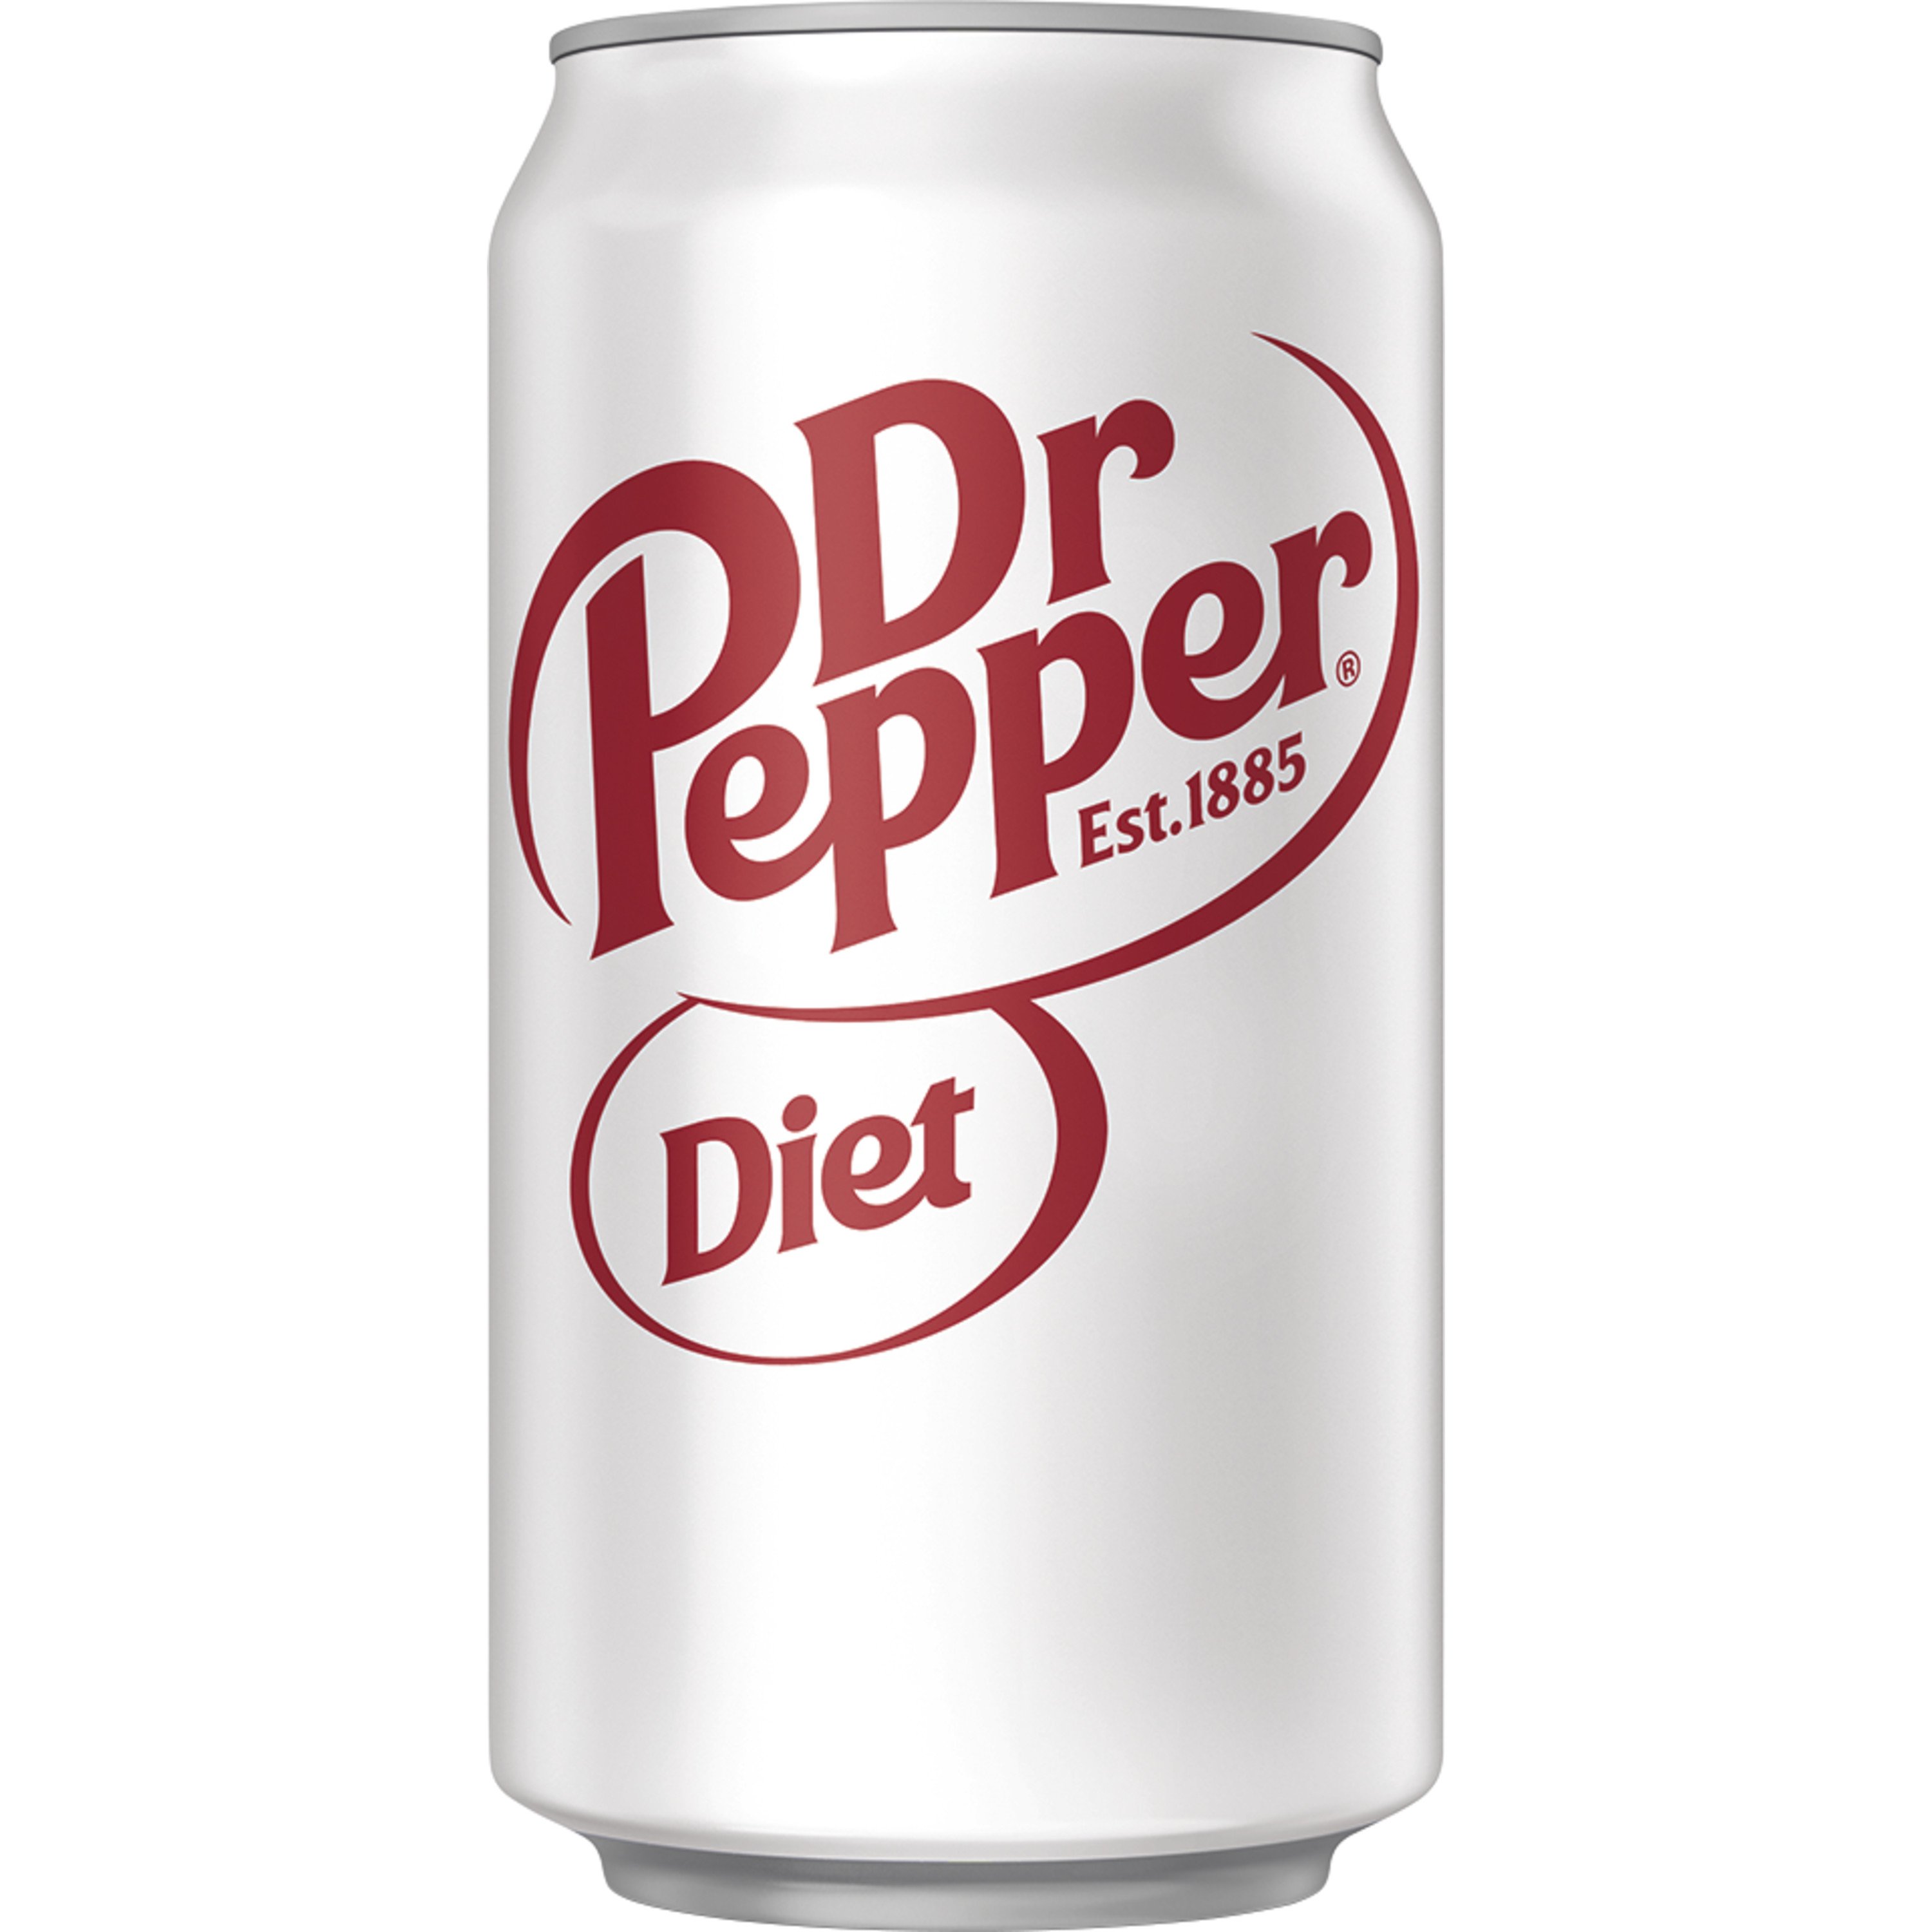 Dr Pepper Diet Soda - Shop Soda at H-E-B